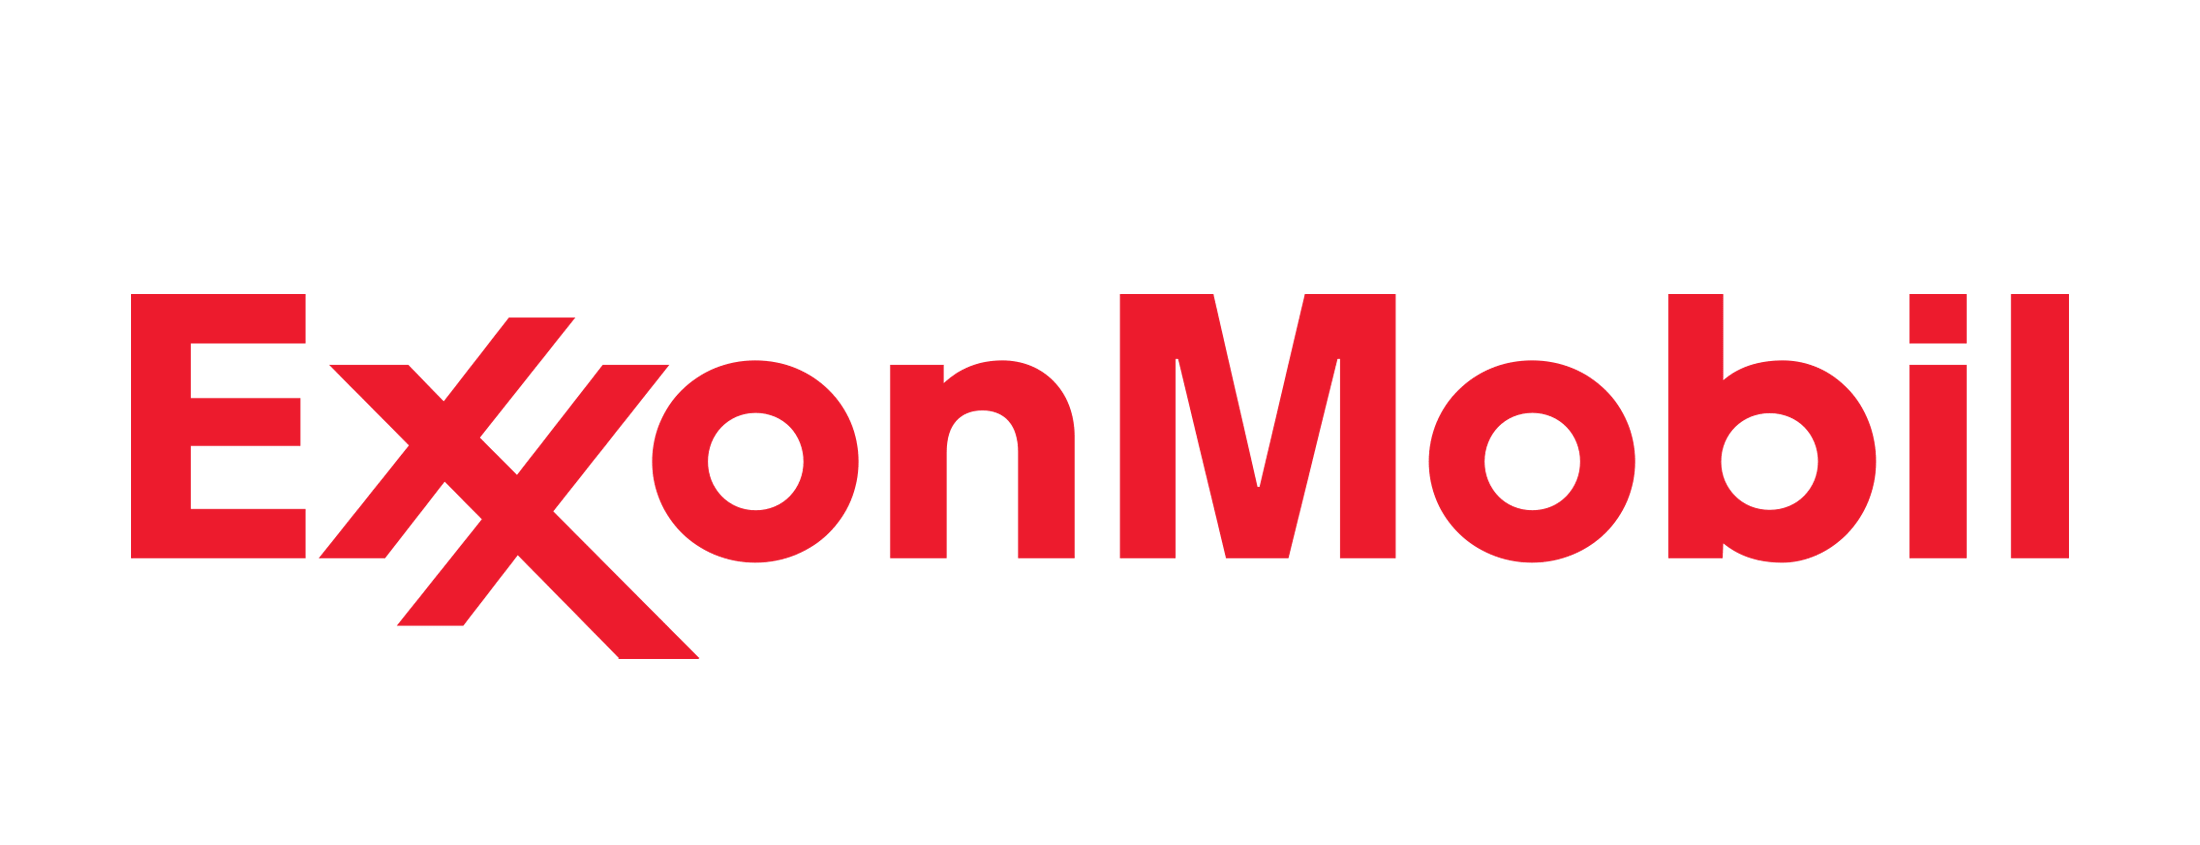 ExxonMobil-Logo-1-min-21660758008